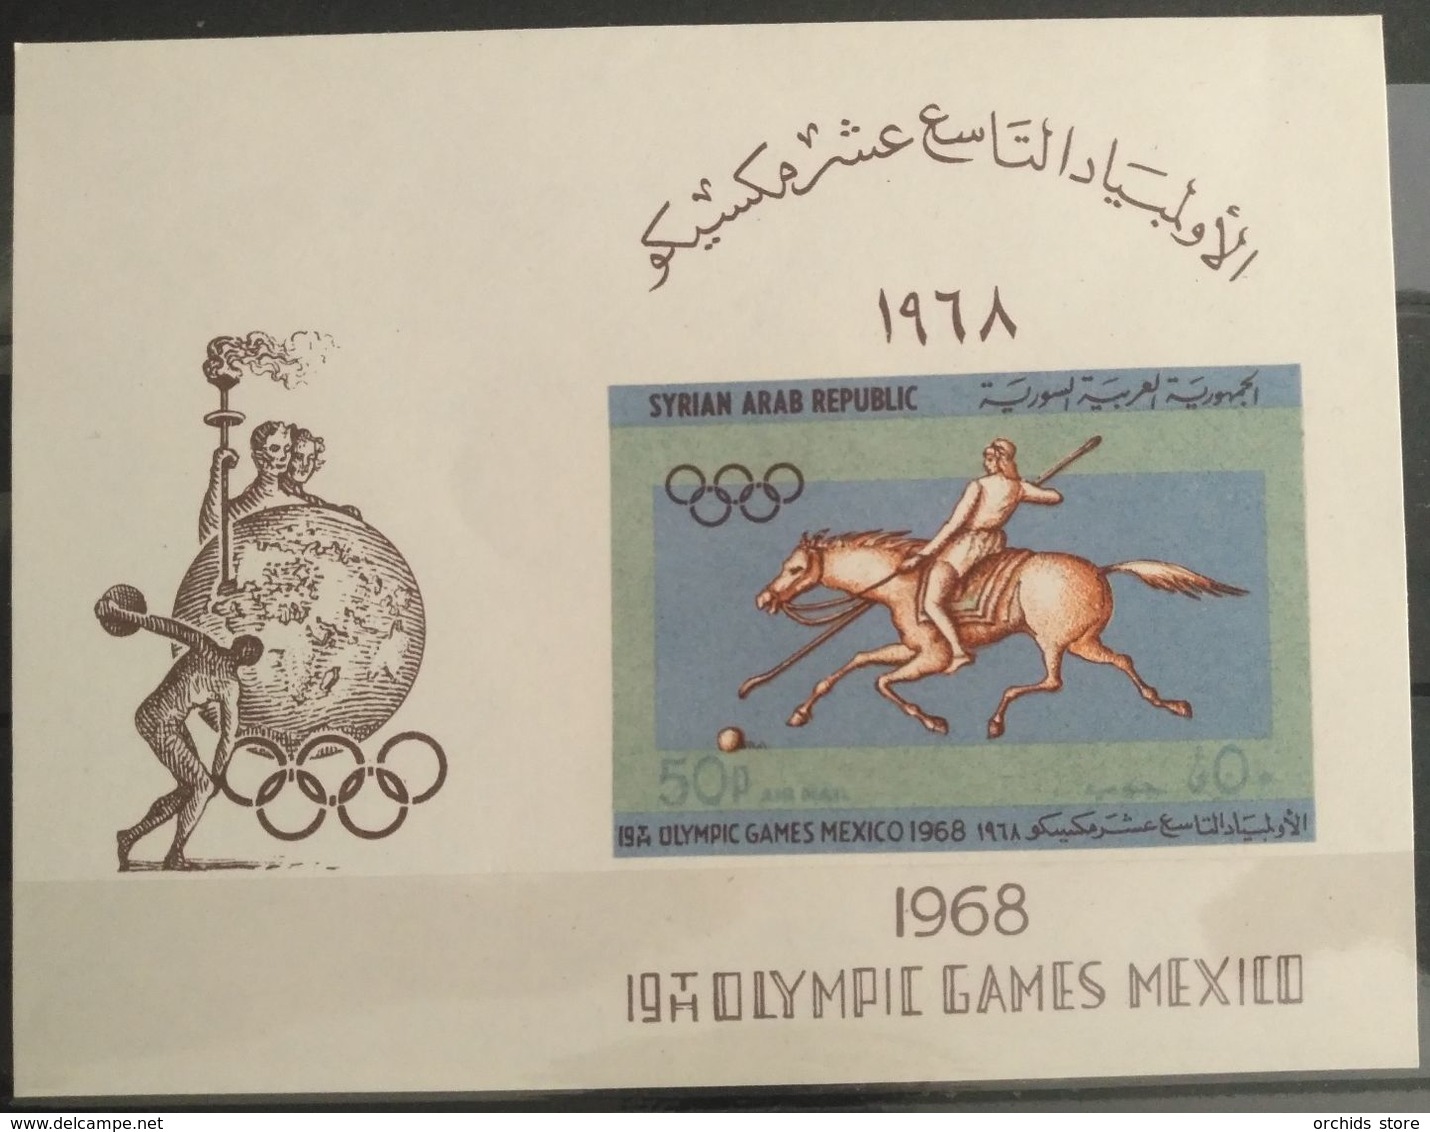 Y31 Syria 1968 Olympic Games Mexico S/S Souvenir Sheet - MNH - Syria